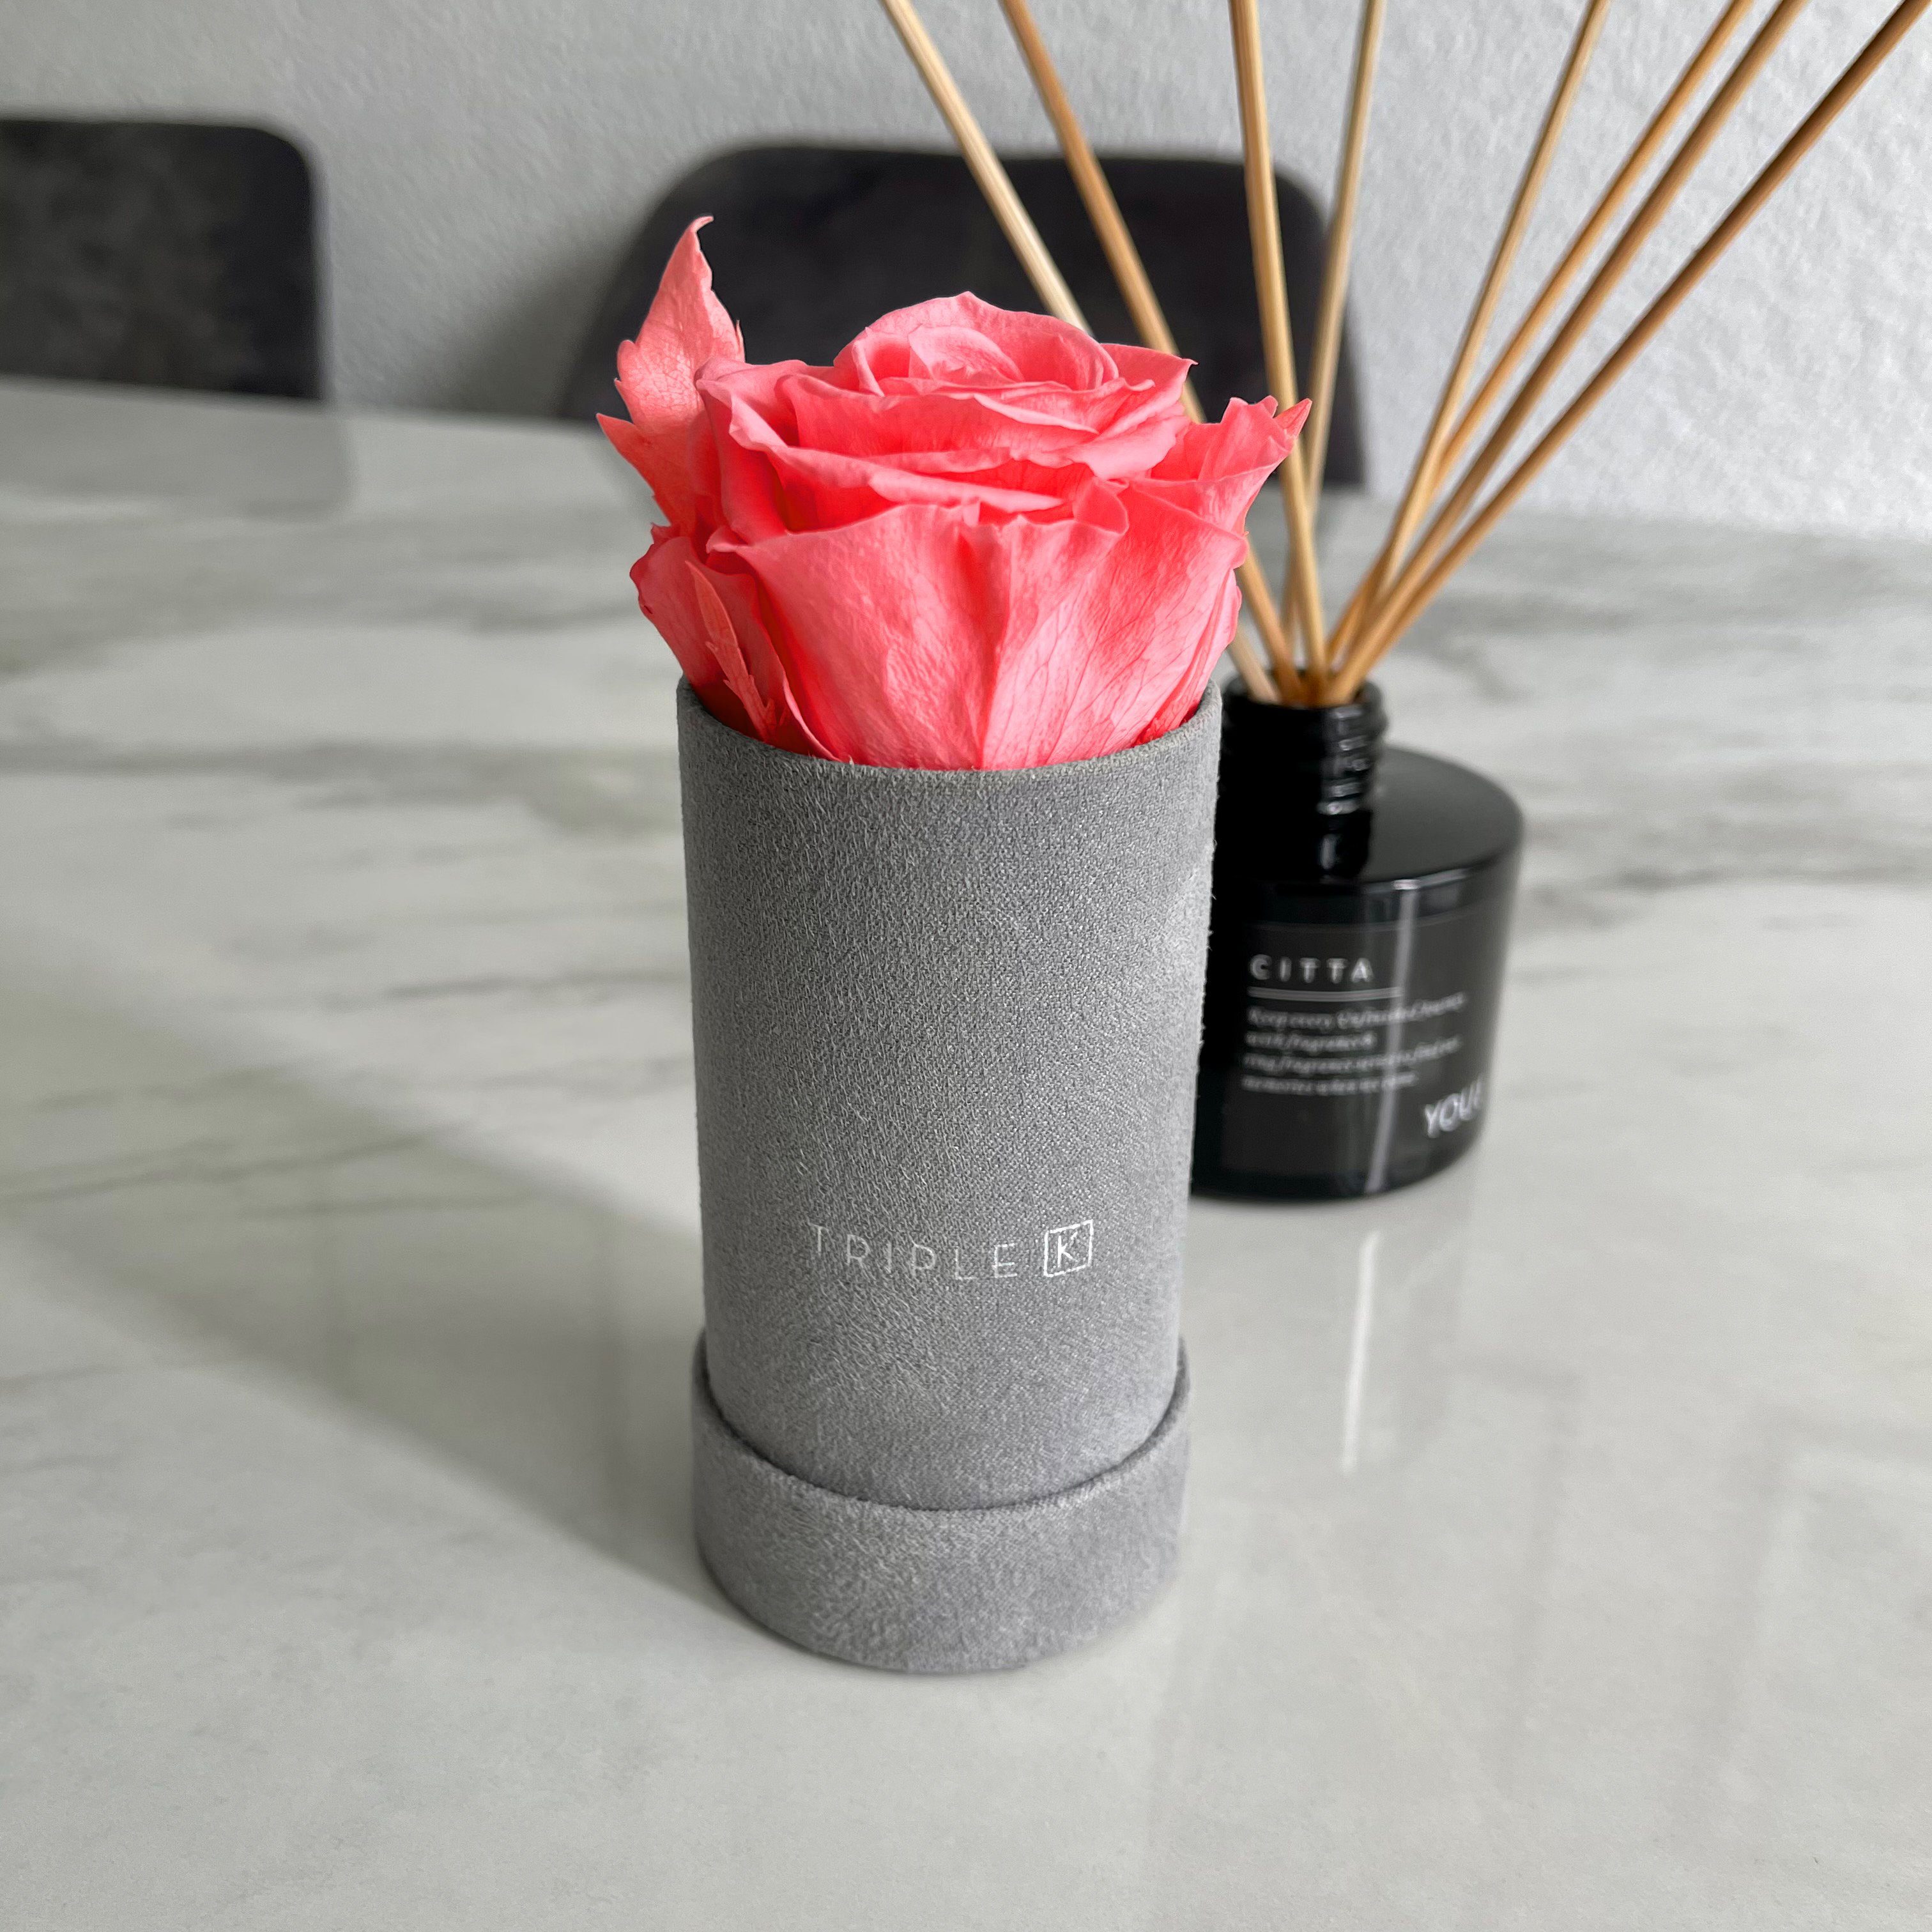 Kunstblume TRIPLE K 3 Flowerbox Rosen, konservierten Rose, Infinity K Grußkarte Inkl. Rosen, bis Rosa Jahre Blumenbox - Rosenbox Velvet mit Infinity Haltbar, TRIPLE mit